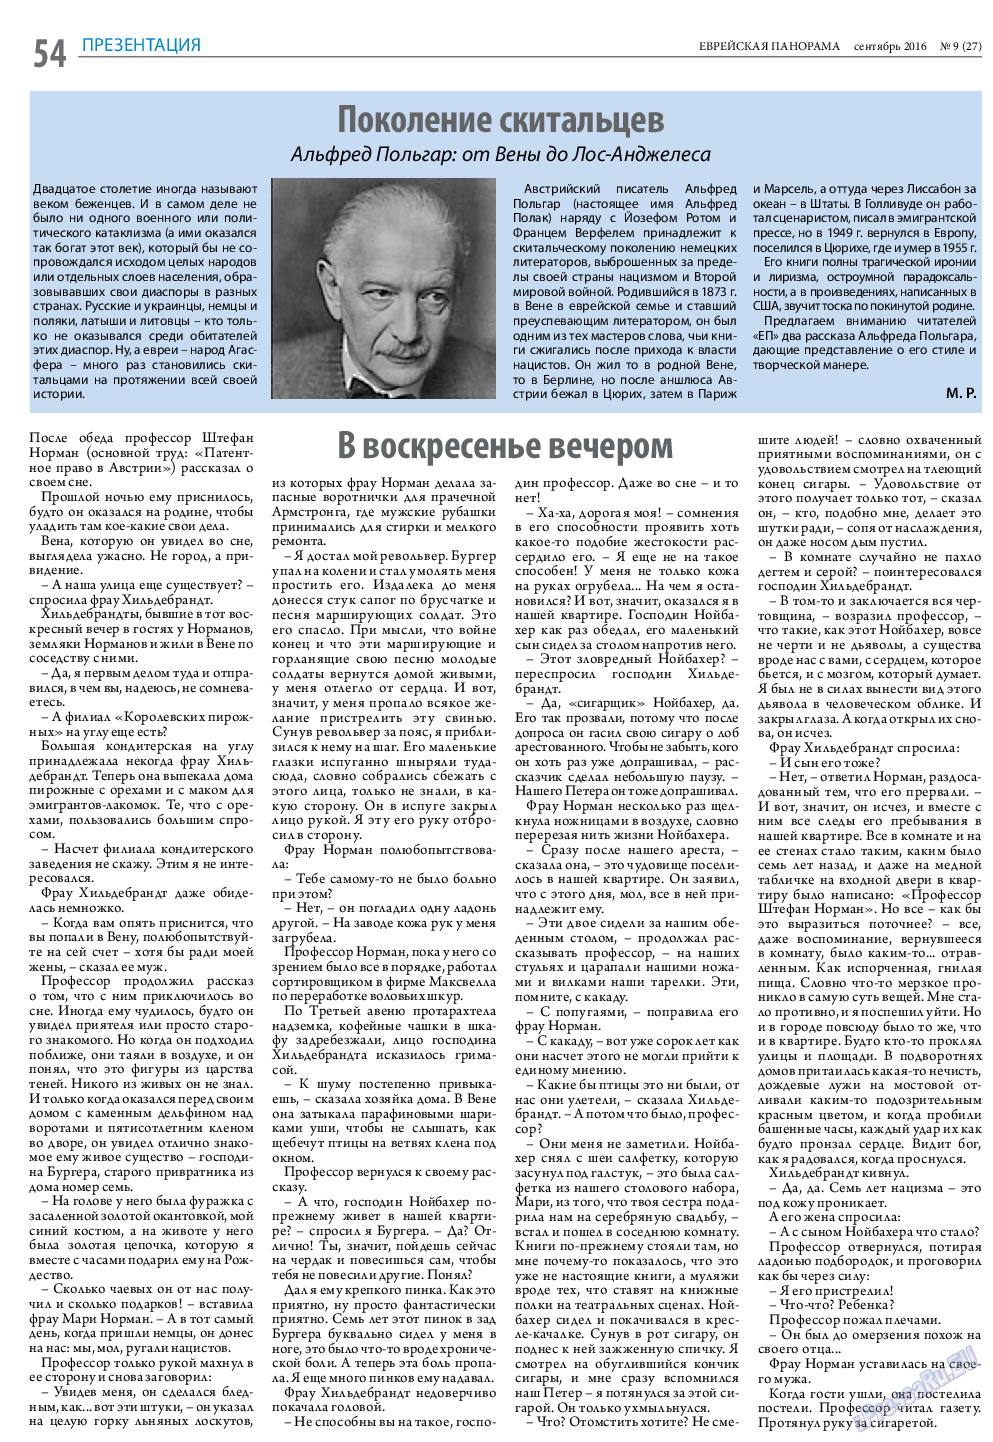 Еврейская панорама, газета. 2016 №9 стр.54